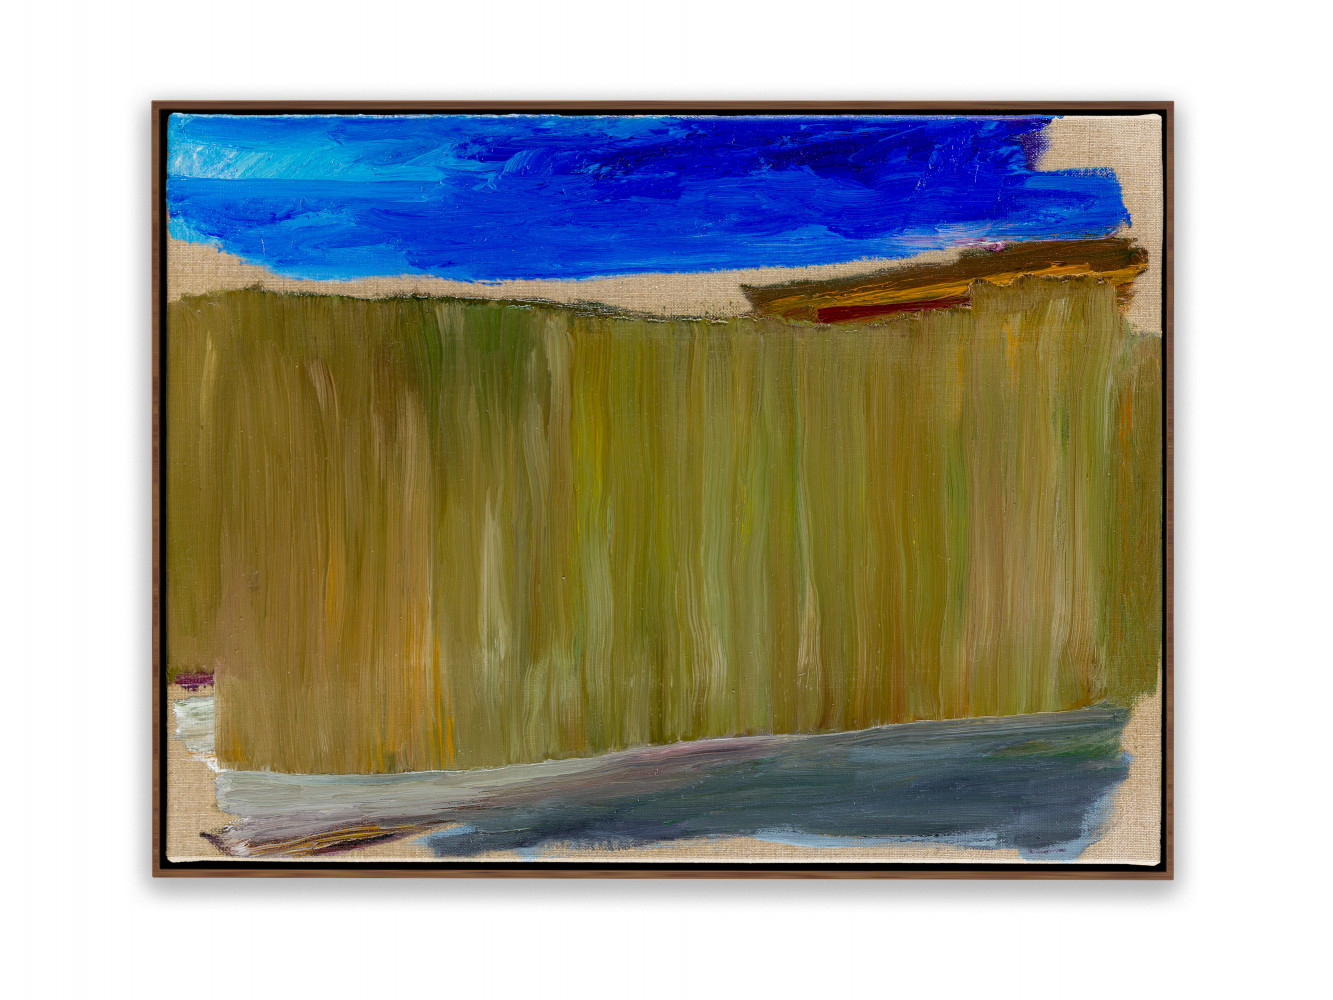 Pedro Cabrita Reis, ‘Landscapes (series XI) #5’, 2020, Öl auf roher Leinwand